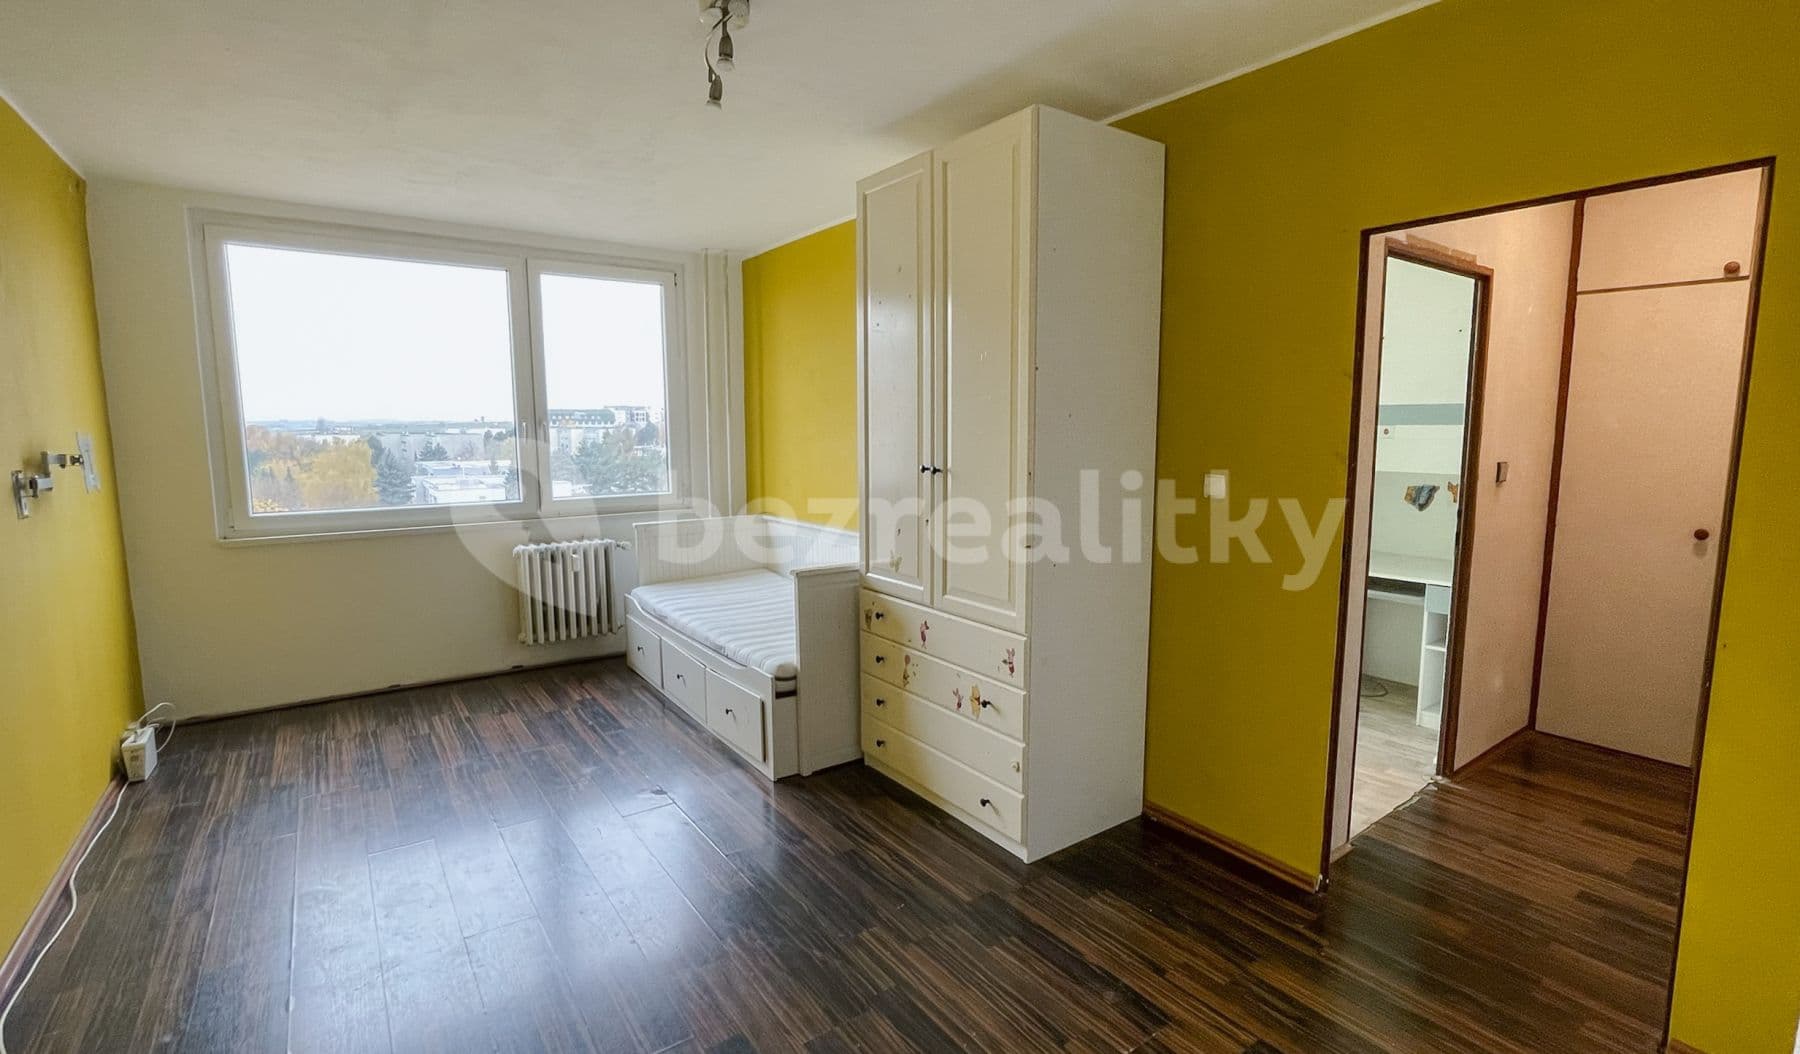 1 bedroom with open-plan kitchen flat for sale, 42 m², Ciolkovského, Prague, Prague